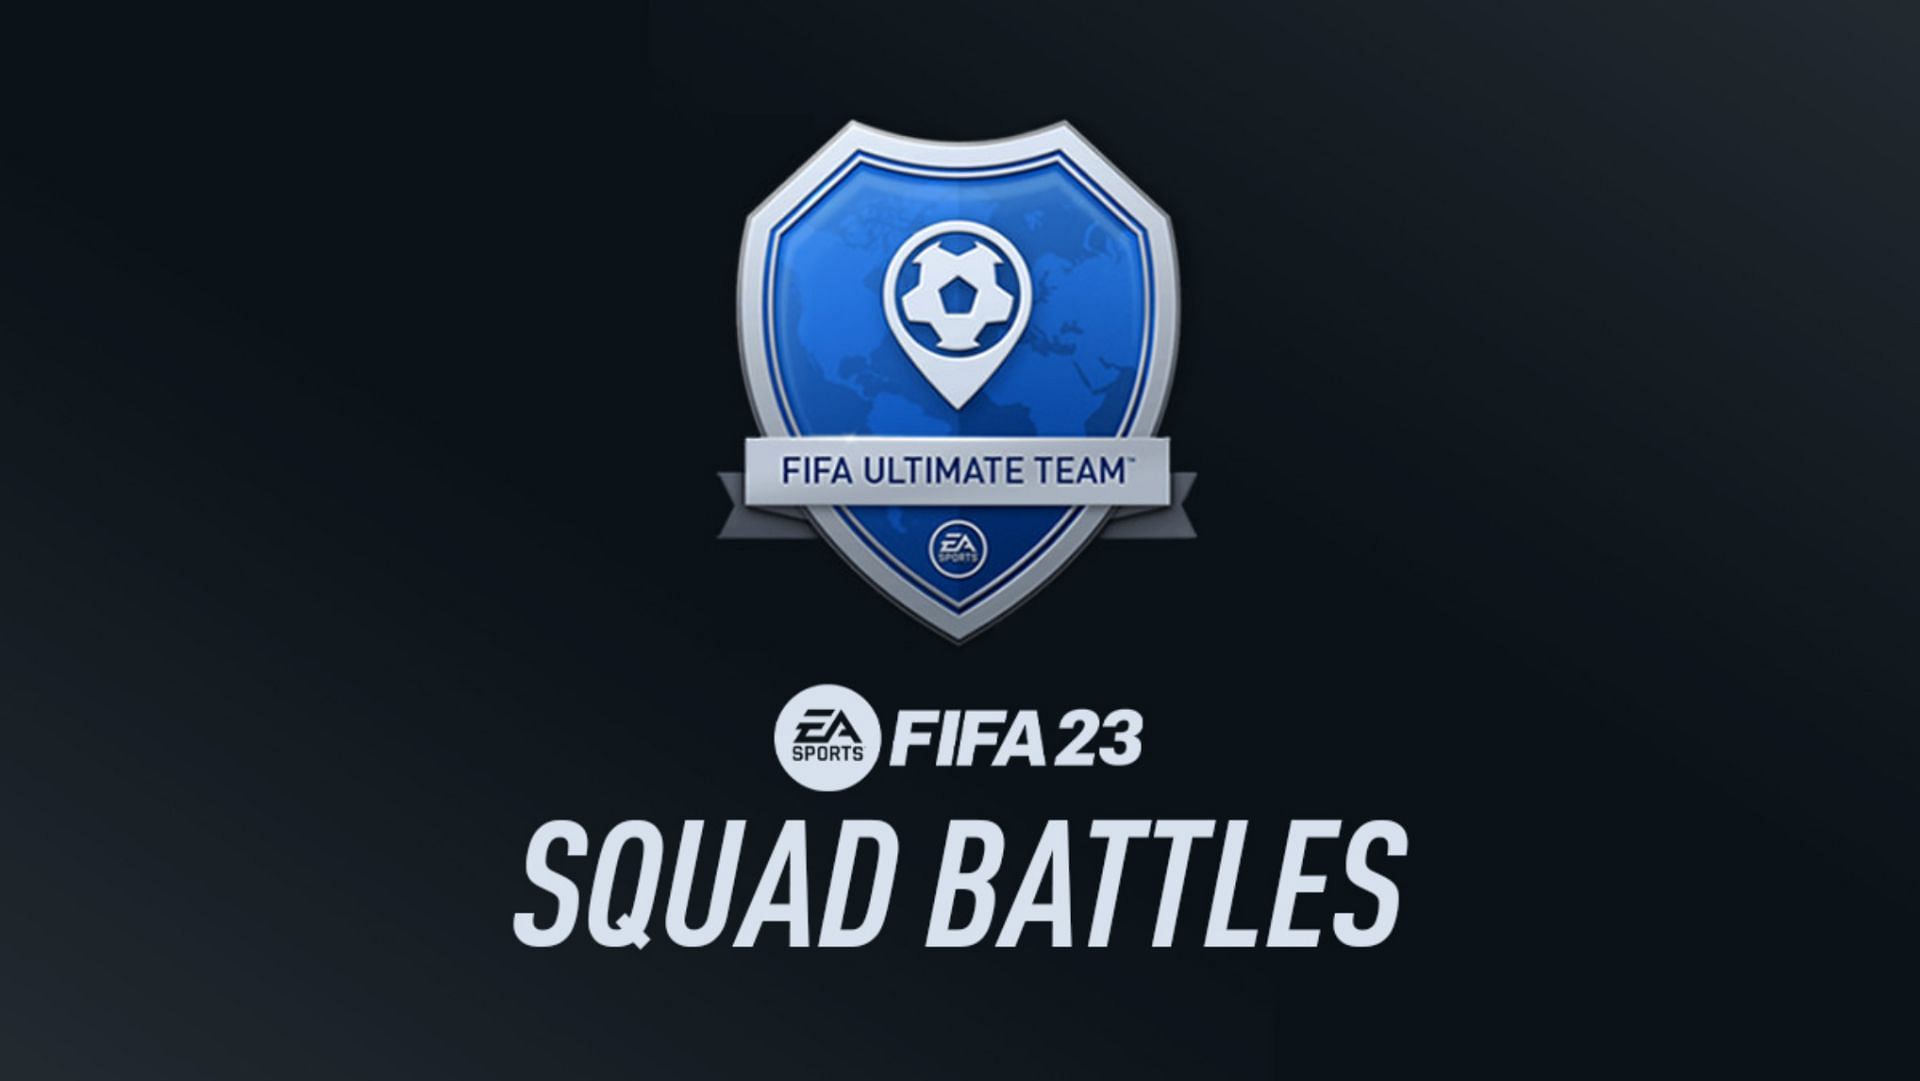 FIFA 23 Rewards List for EA Play Members